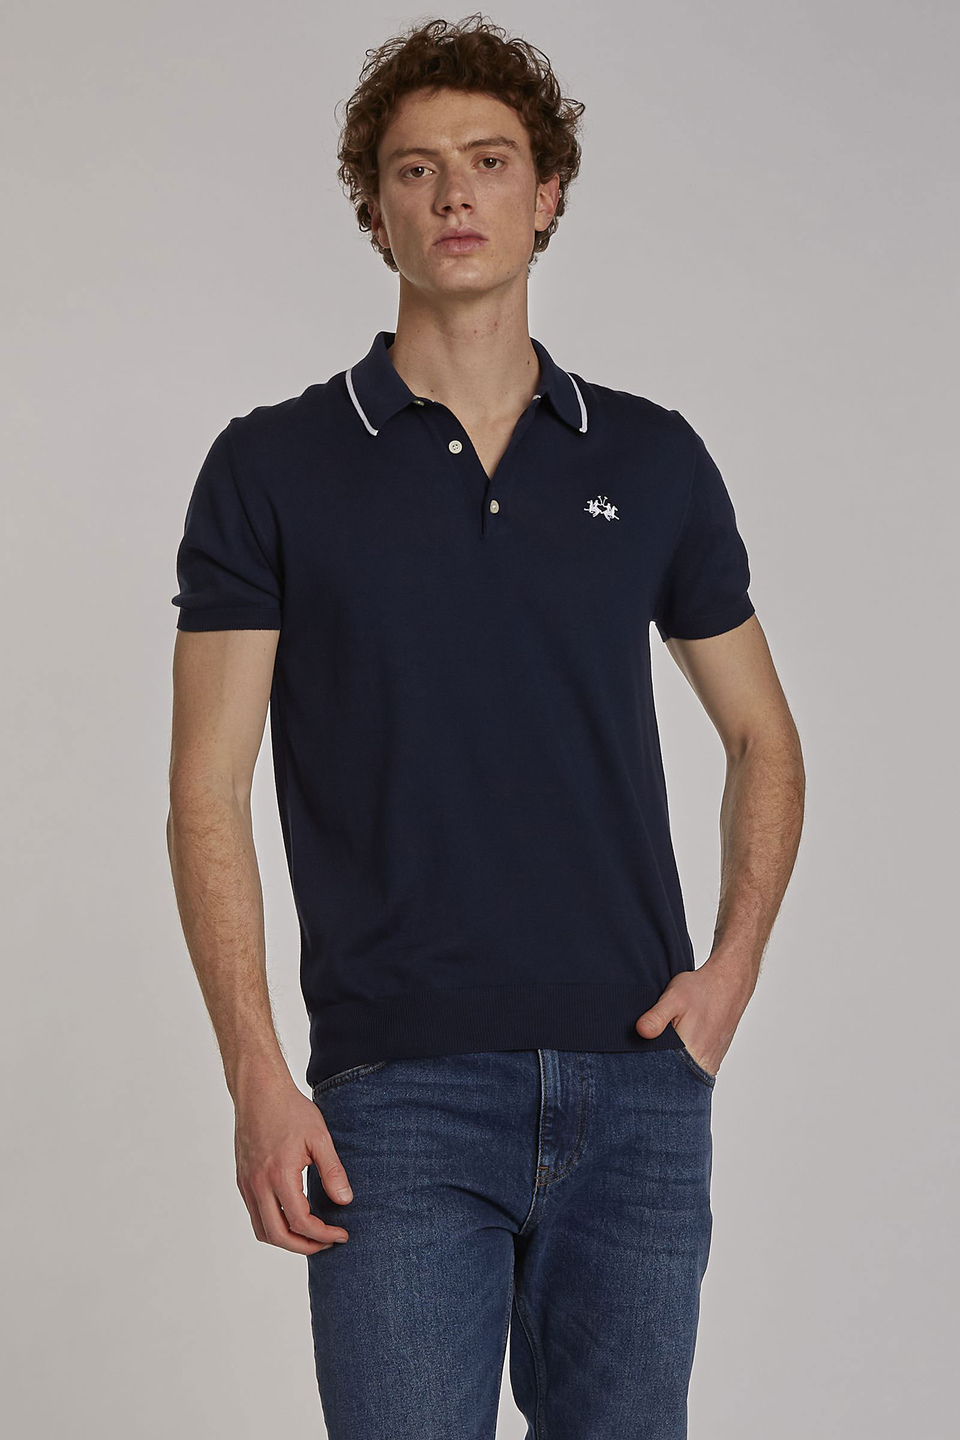 Herren-Poloshirt mit kurzen Ärmeln aus Baumwolle im Regular Fit - La Martina - Official Online Shop